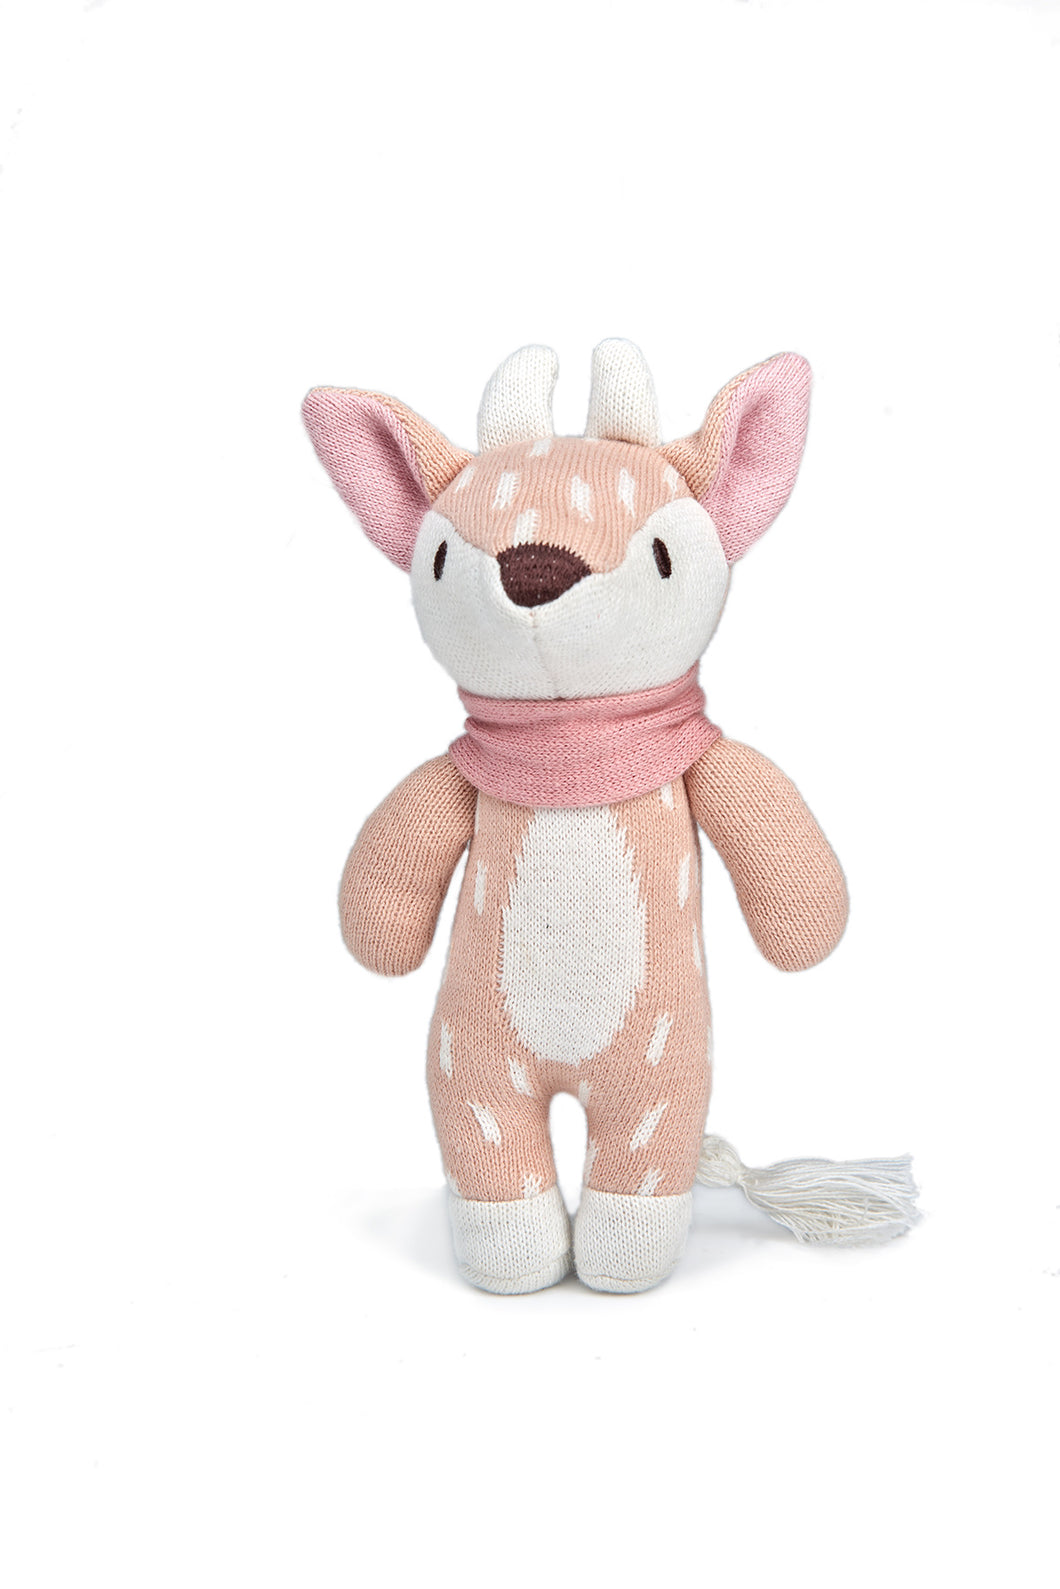 Threadbear Designs Fearne the Deer Knitted Toy